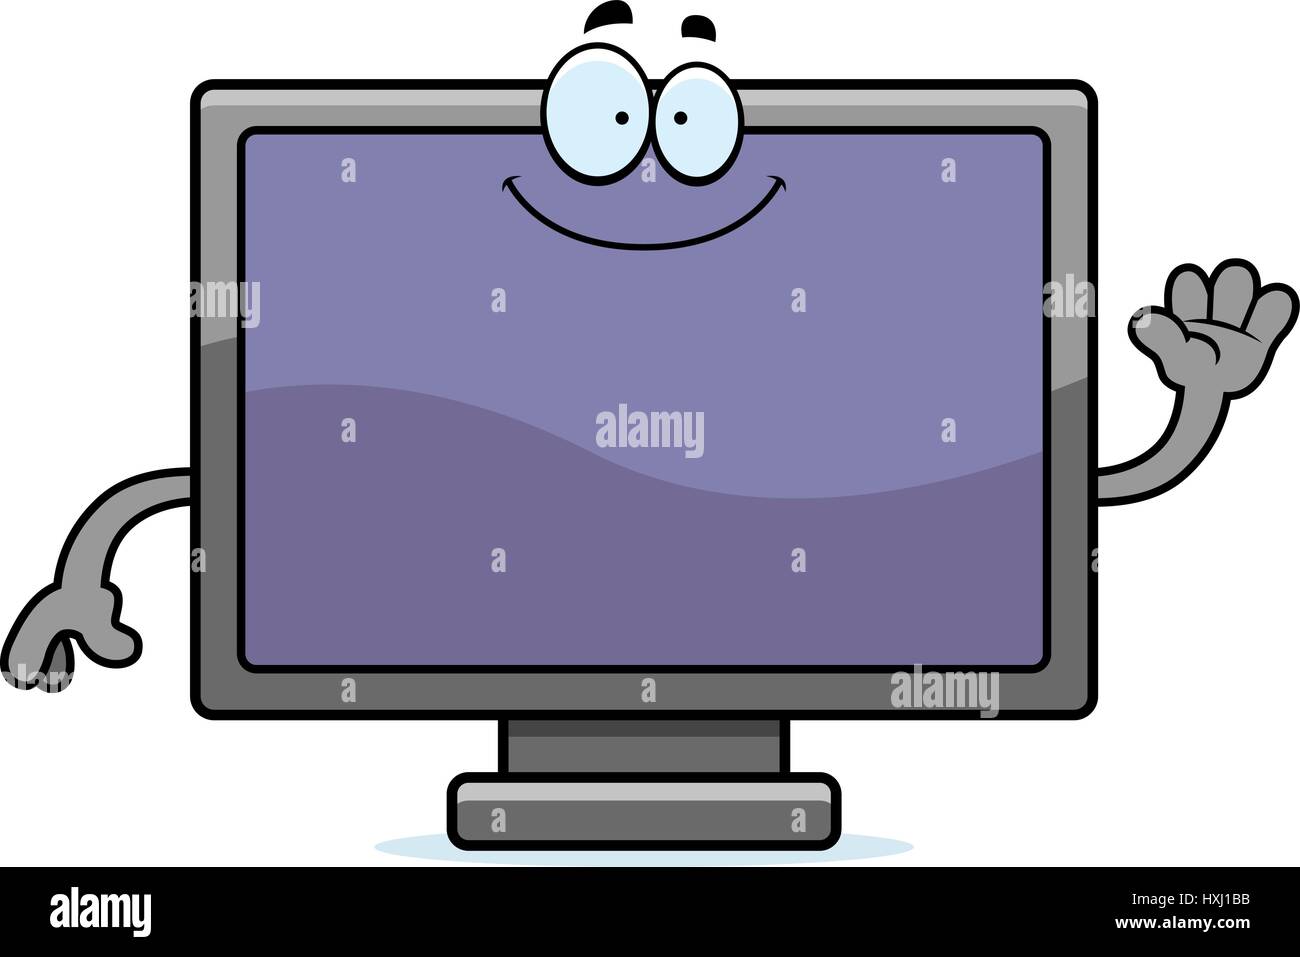 A cartoon illustration of a flat screen television waving. Stock Vector